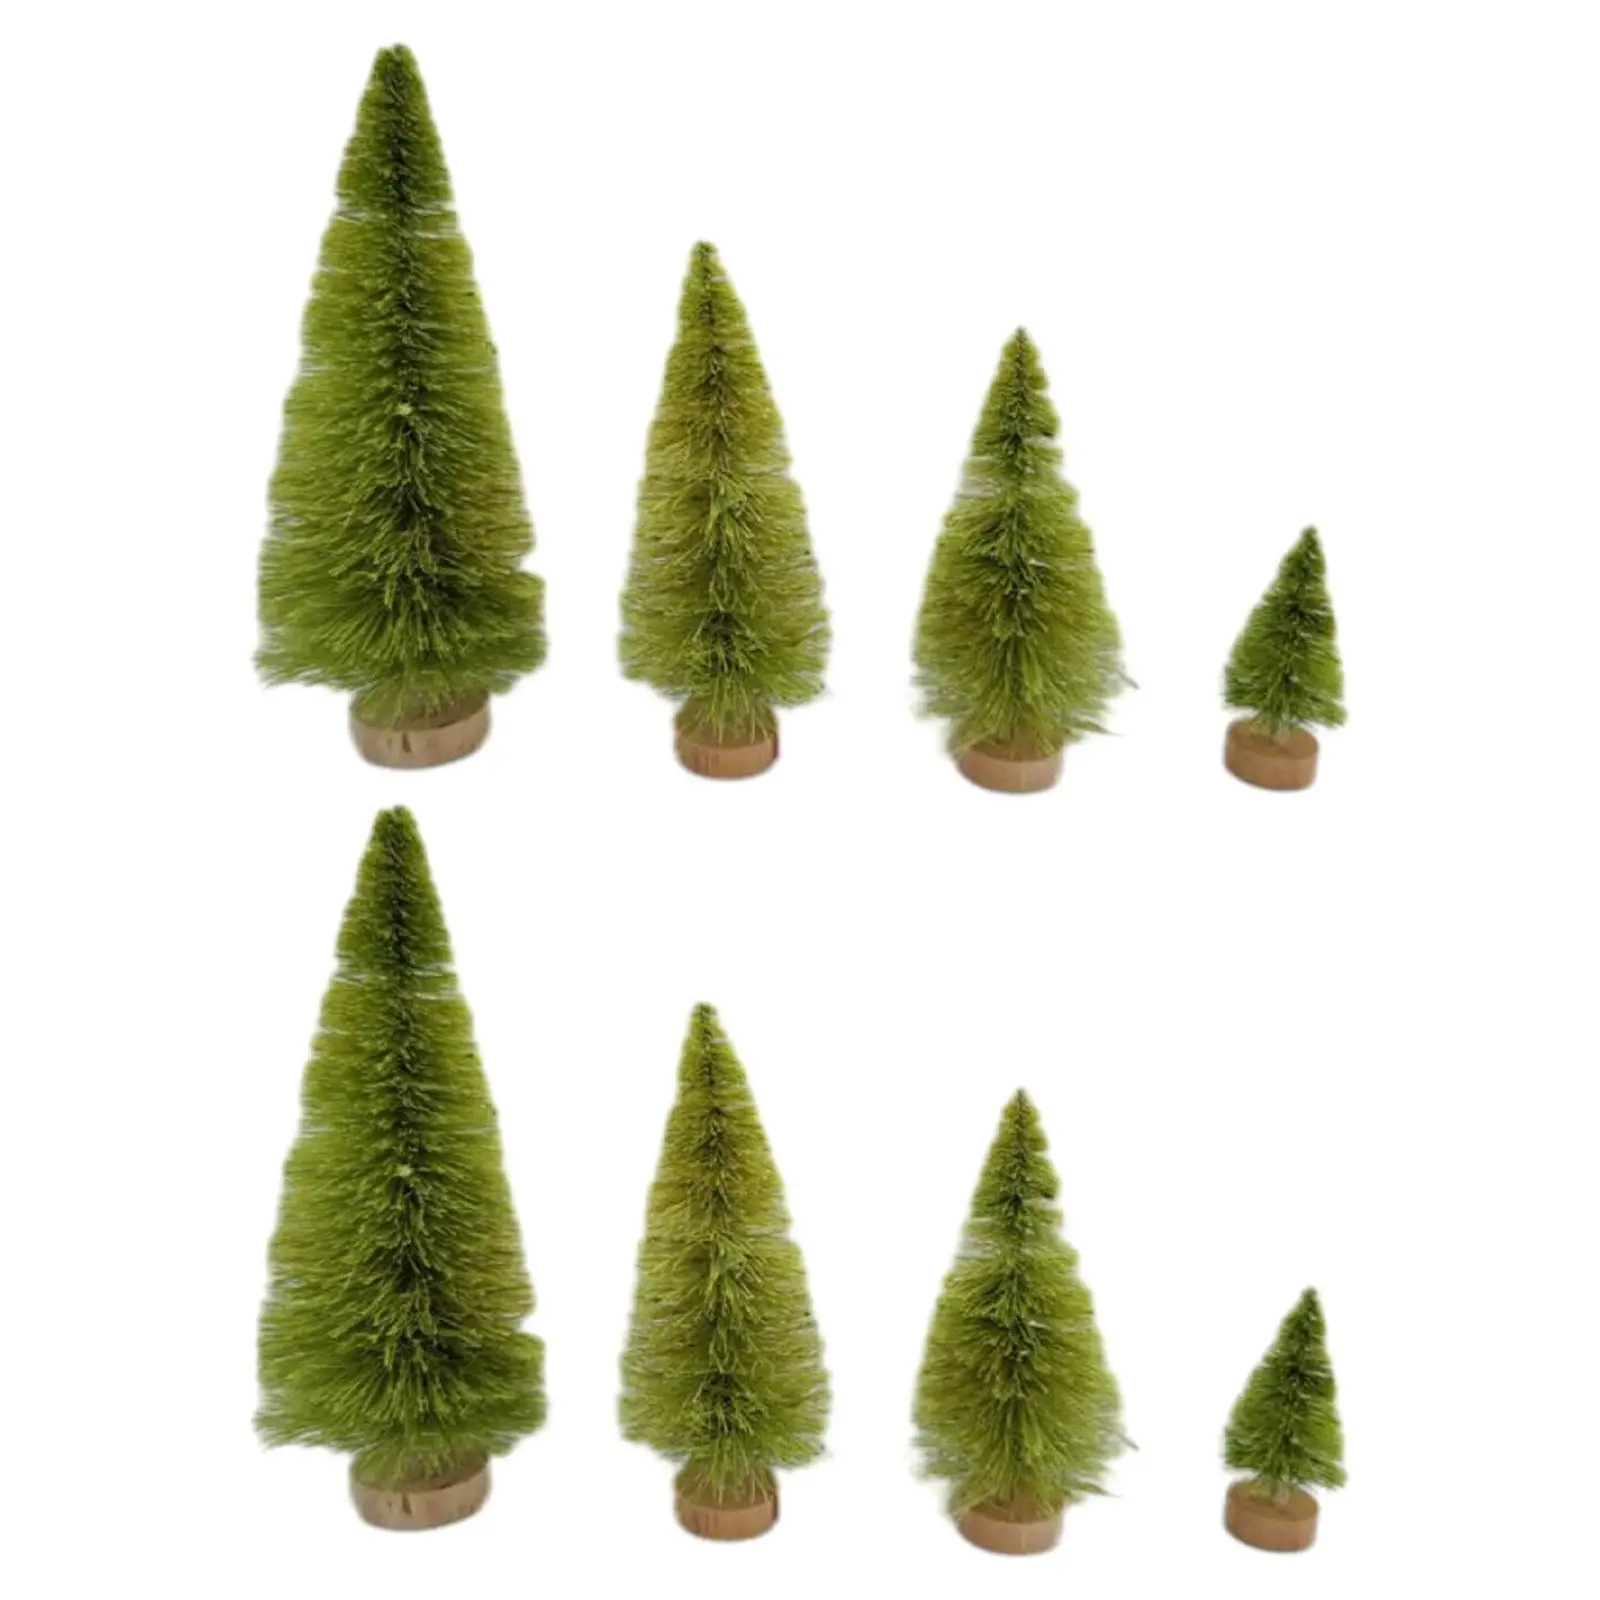 8x Artificial Christmas Tree Desktop Ornaments Miniature Mini Christmas Decor for Christmas New Year Home Indoor Centerpiece